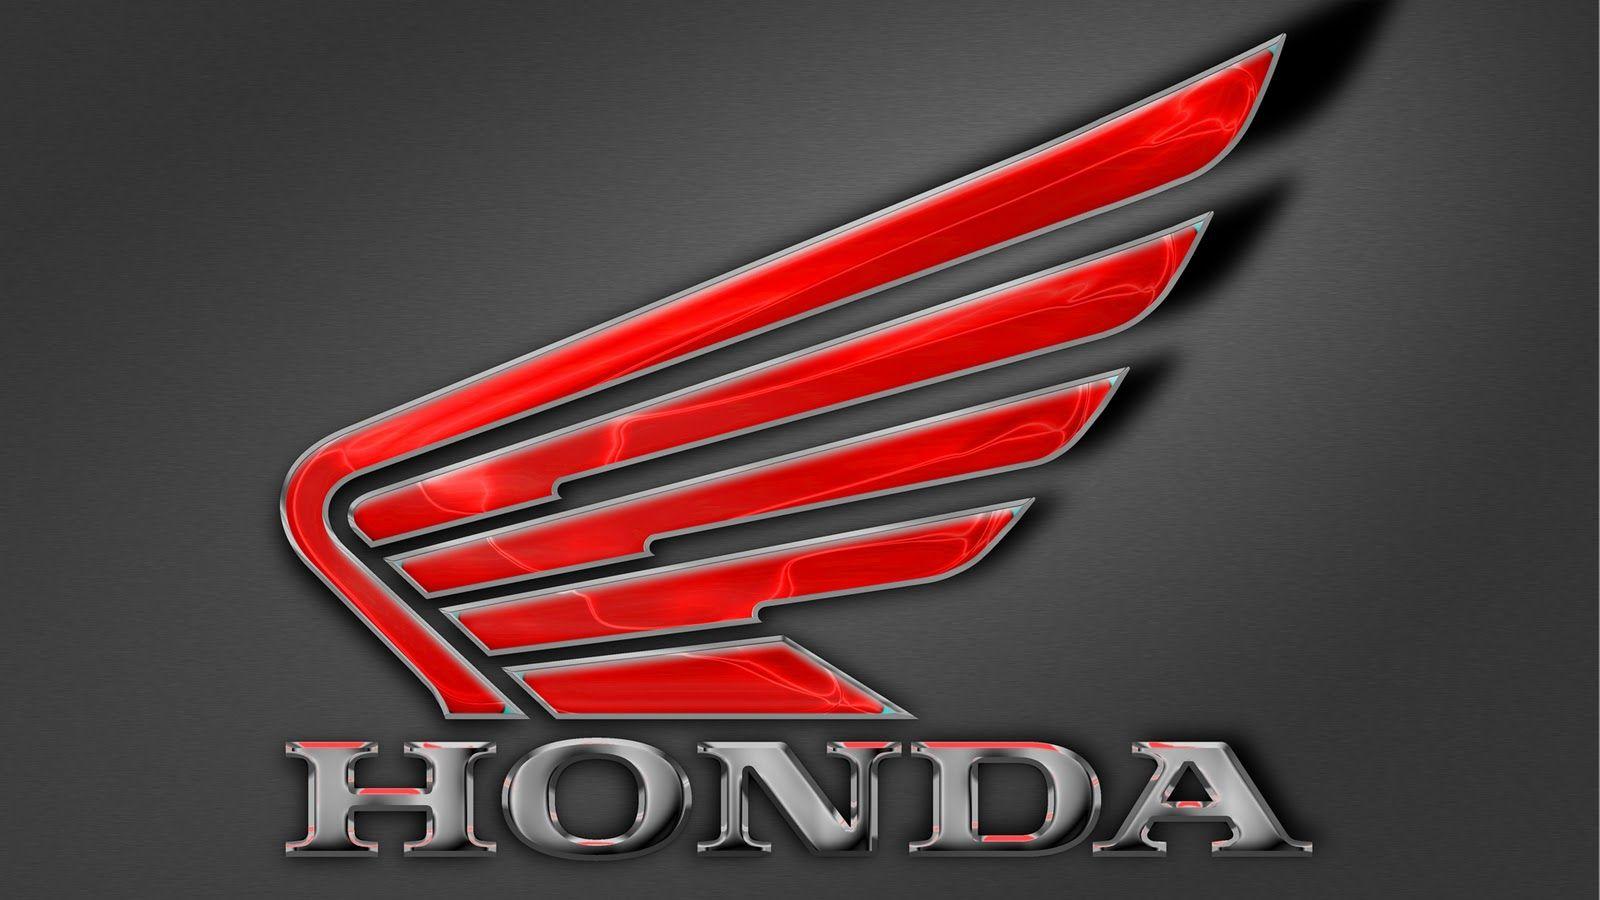 Honda Motocross Logo - Honda motorcycle Logos